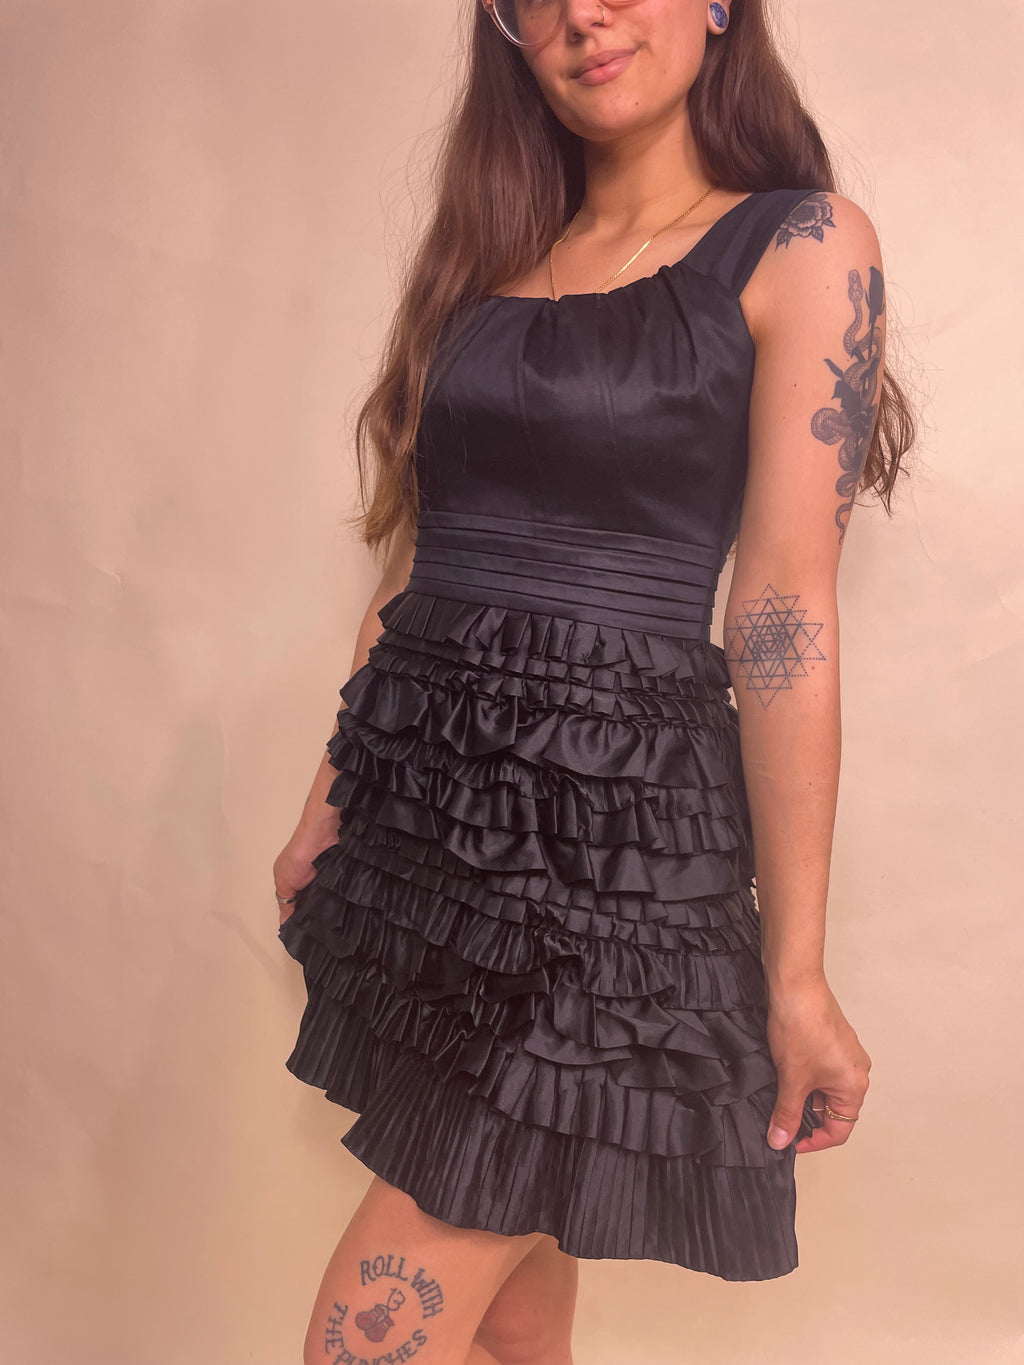 Ruffled black mini dress, Size M